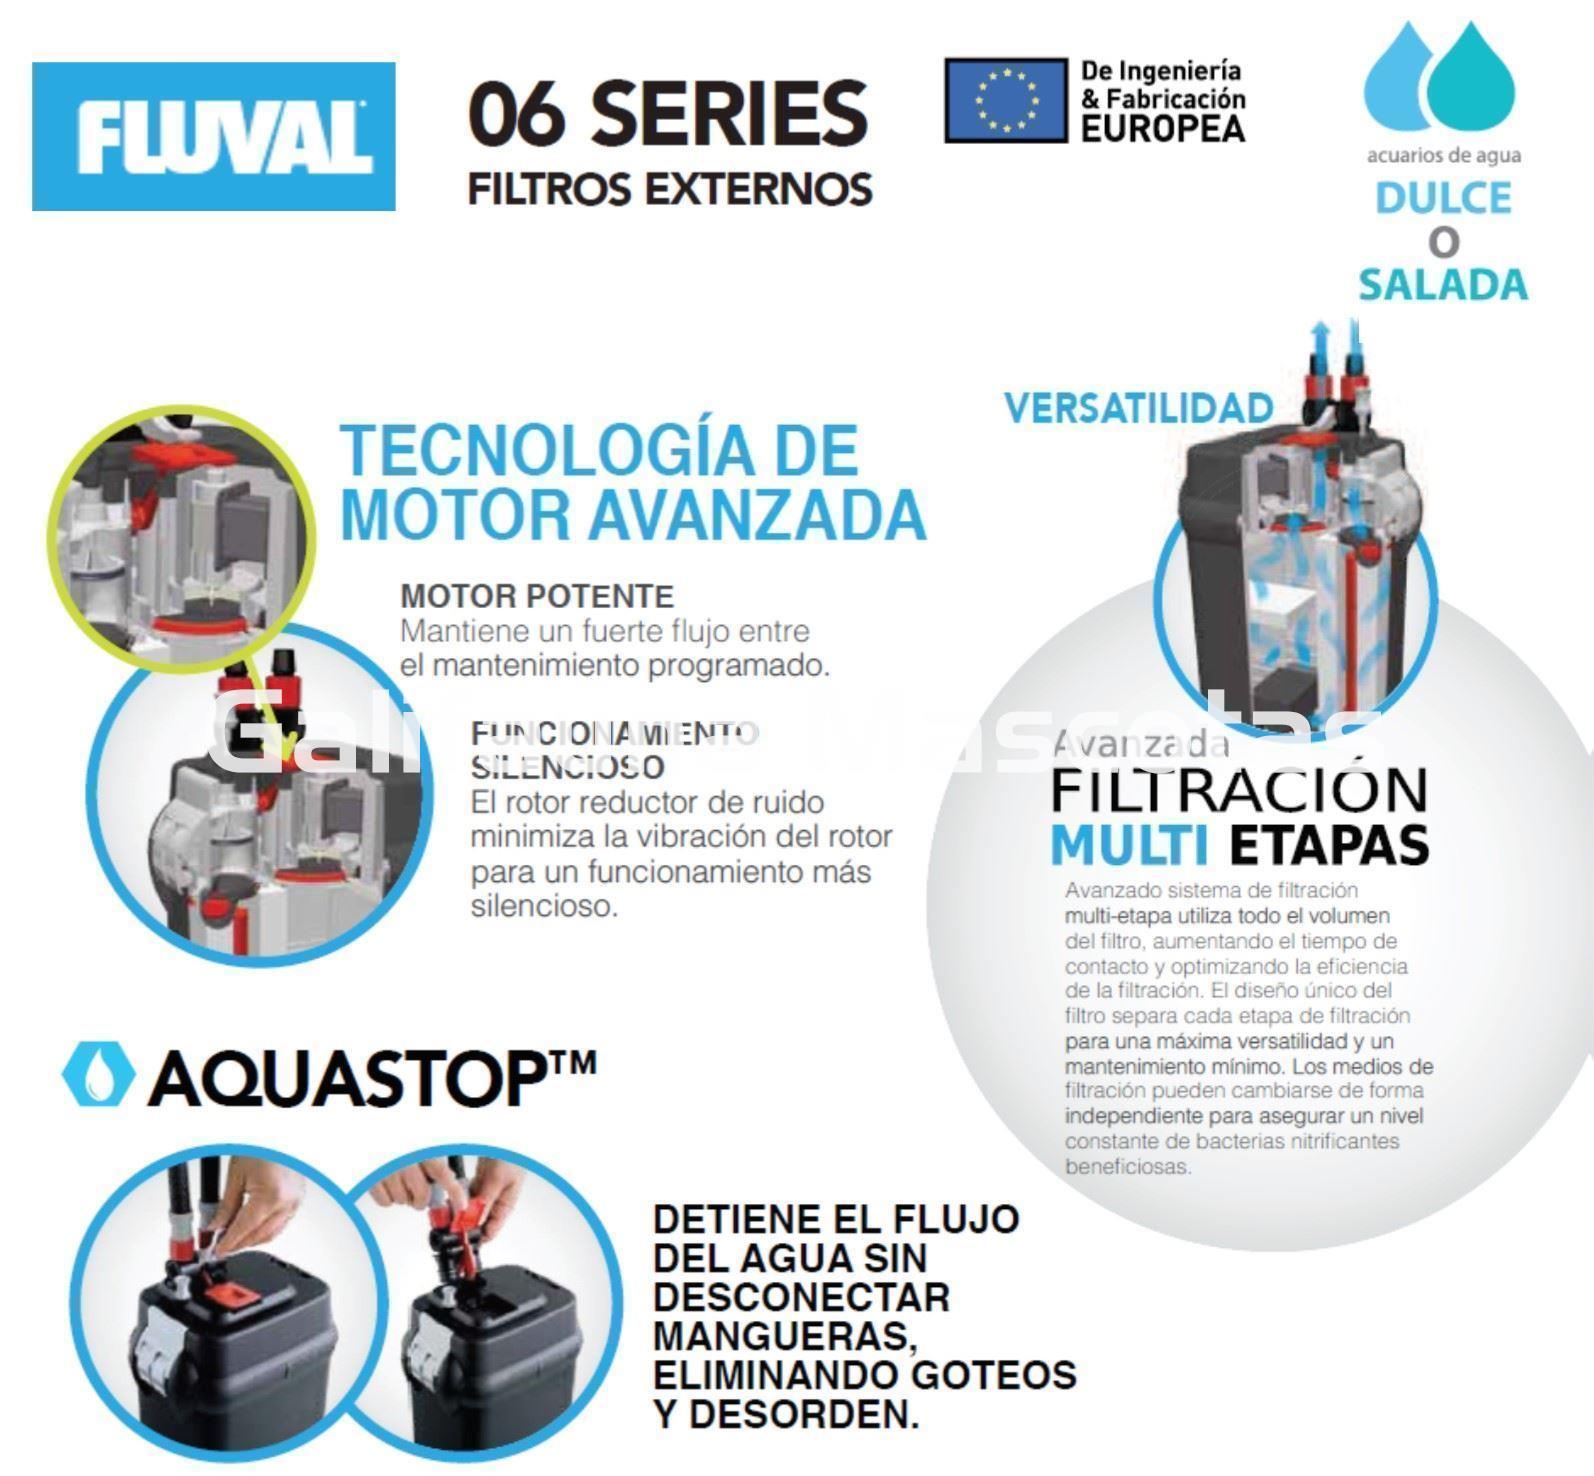 Filtros exteriores FLUVAL serie 06. Desde 550 hasta 1450 litros / hora. - Imagen 2